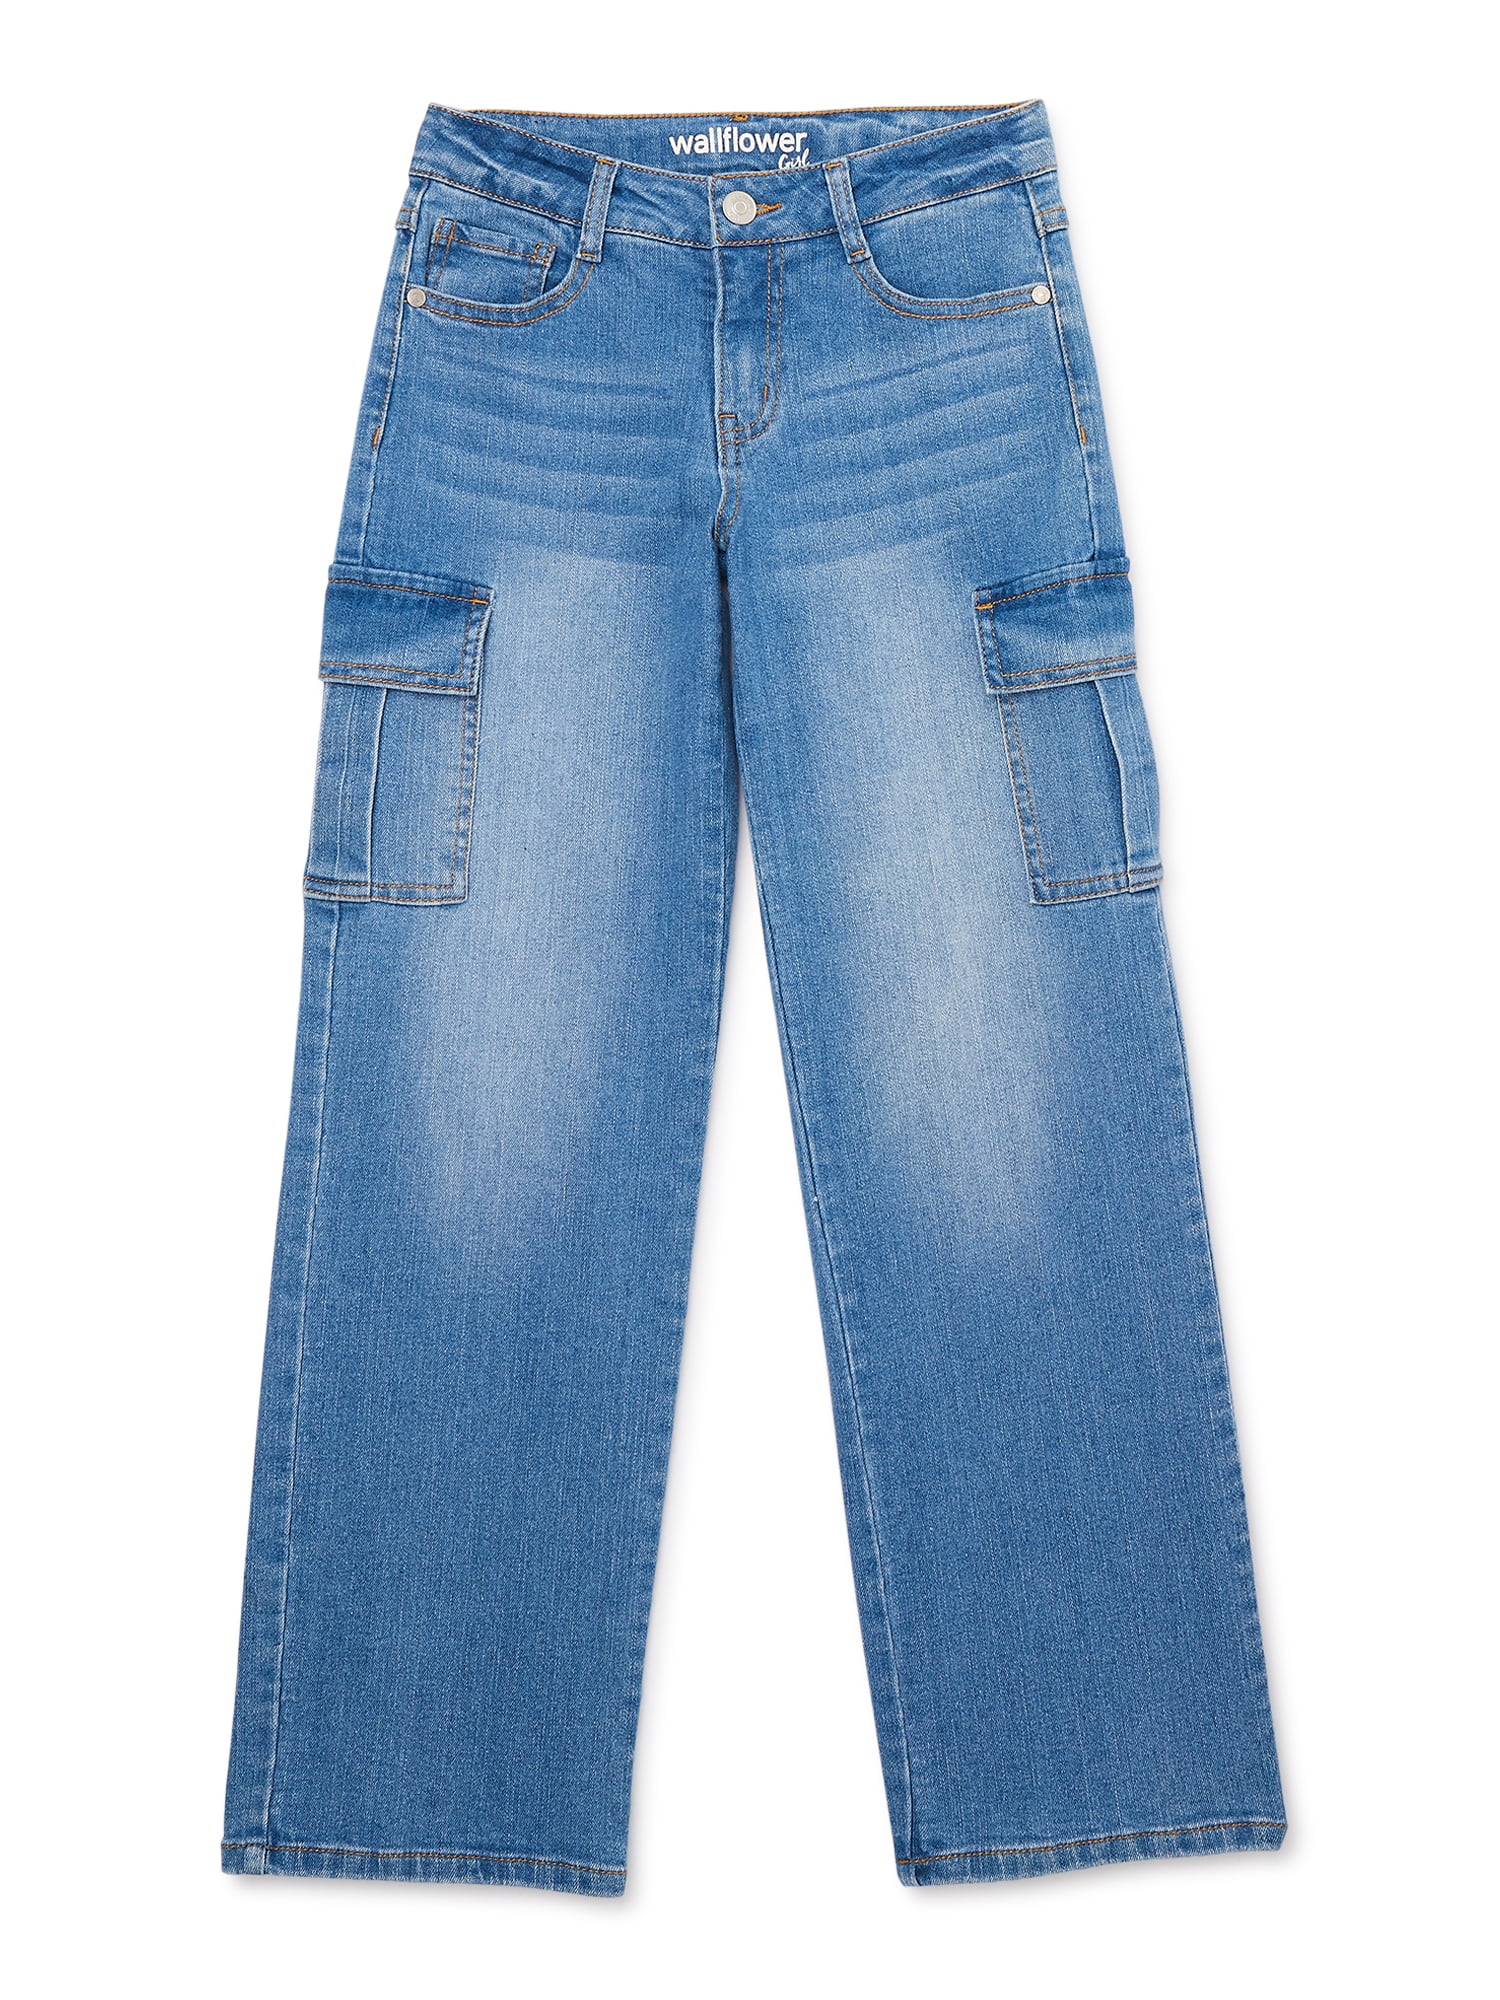 Wallflower Girls Wide-Leg Jeans with Pork Chop Pockets, Sizes 7-16 ...